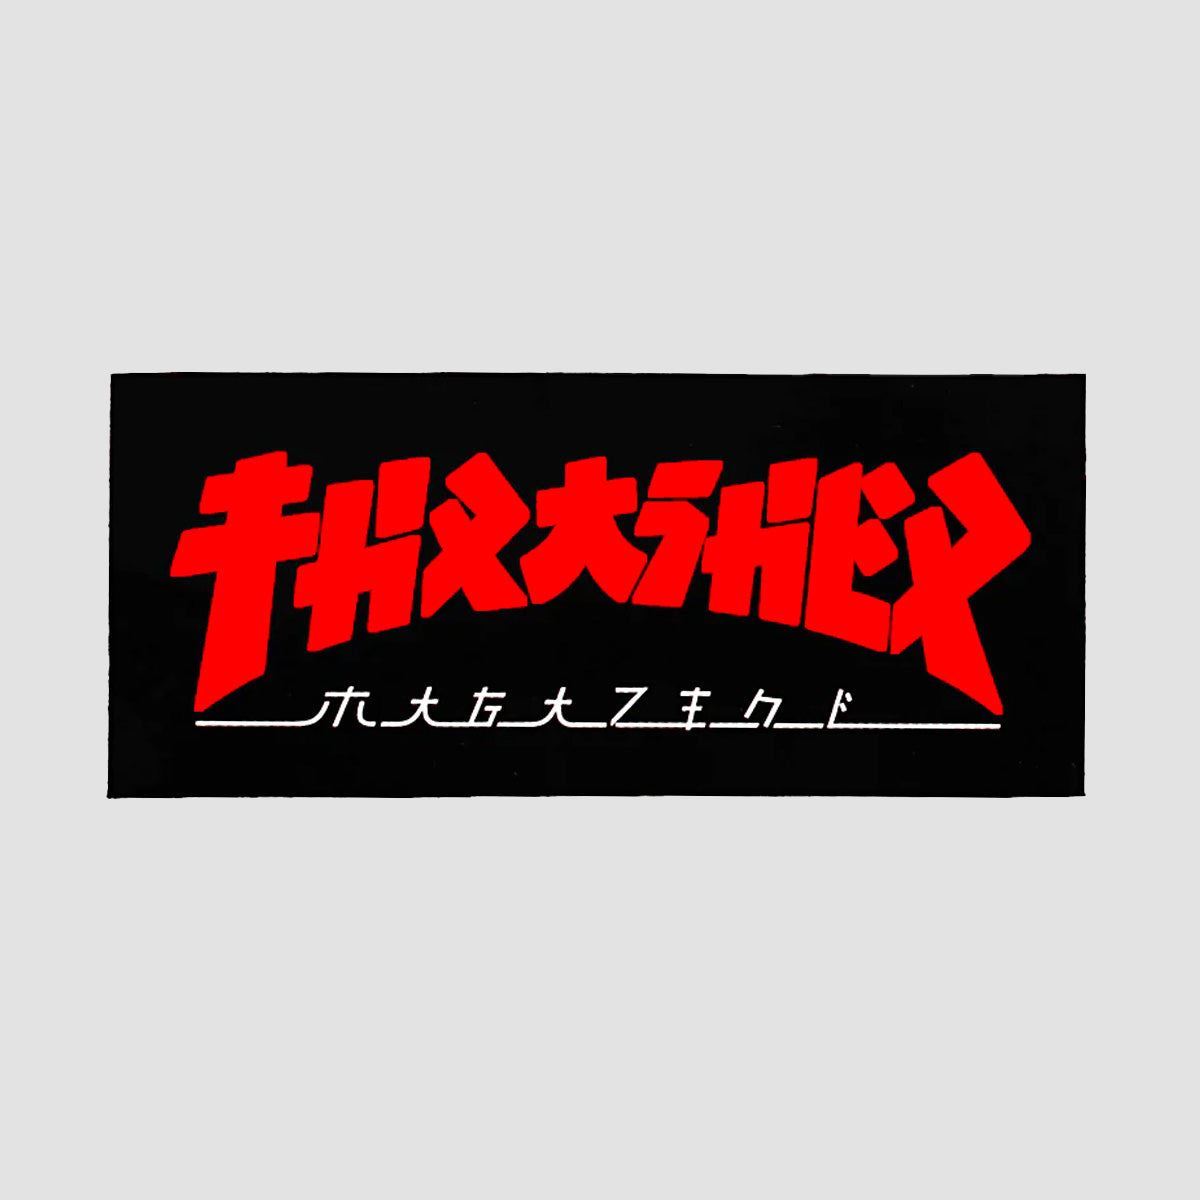 Thrasher Godzilla Rectangle Sticker Red/Black 150x65mm